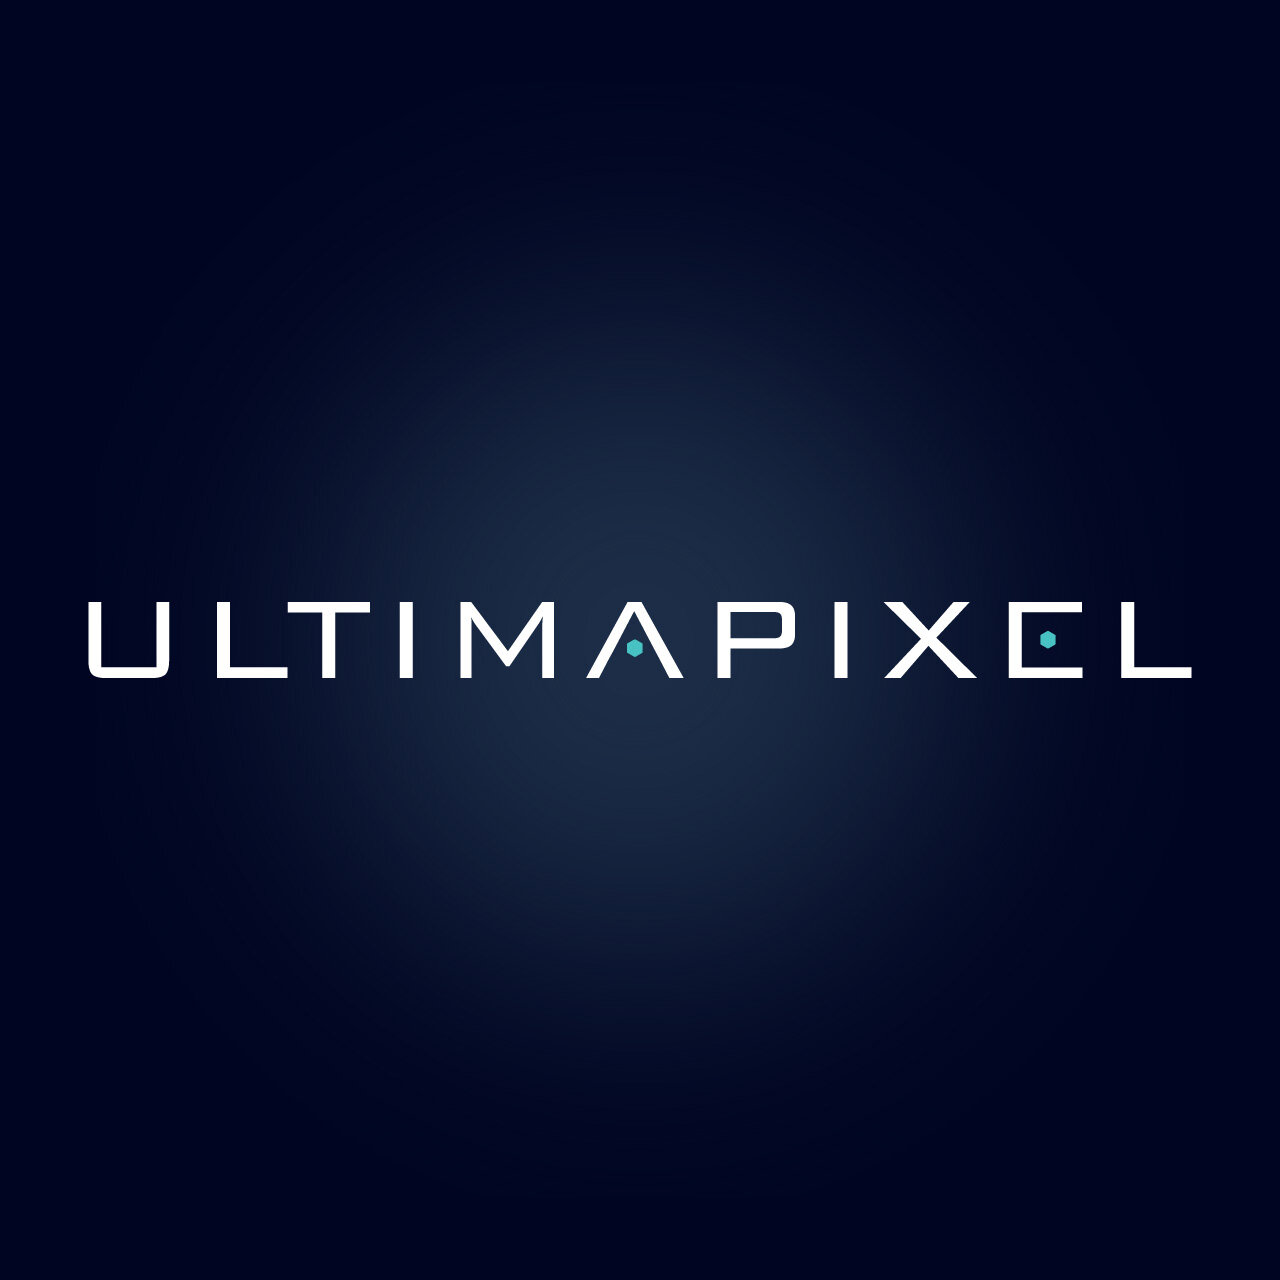 Ultimapixel Logo Design Option 2-01.jpg